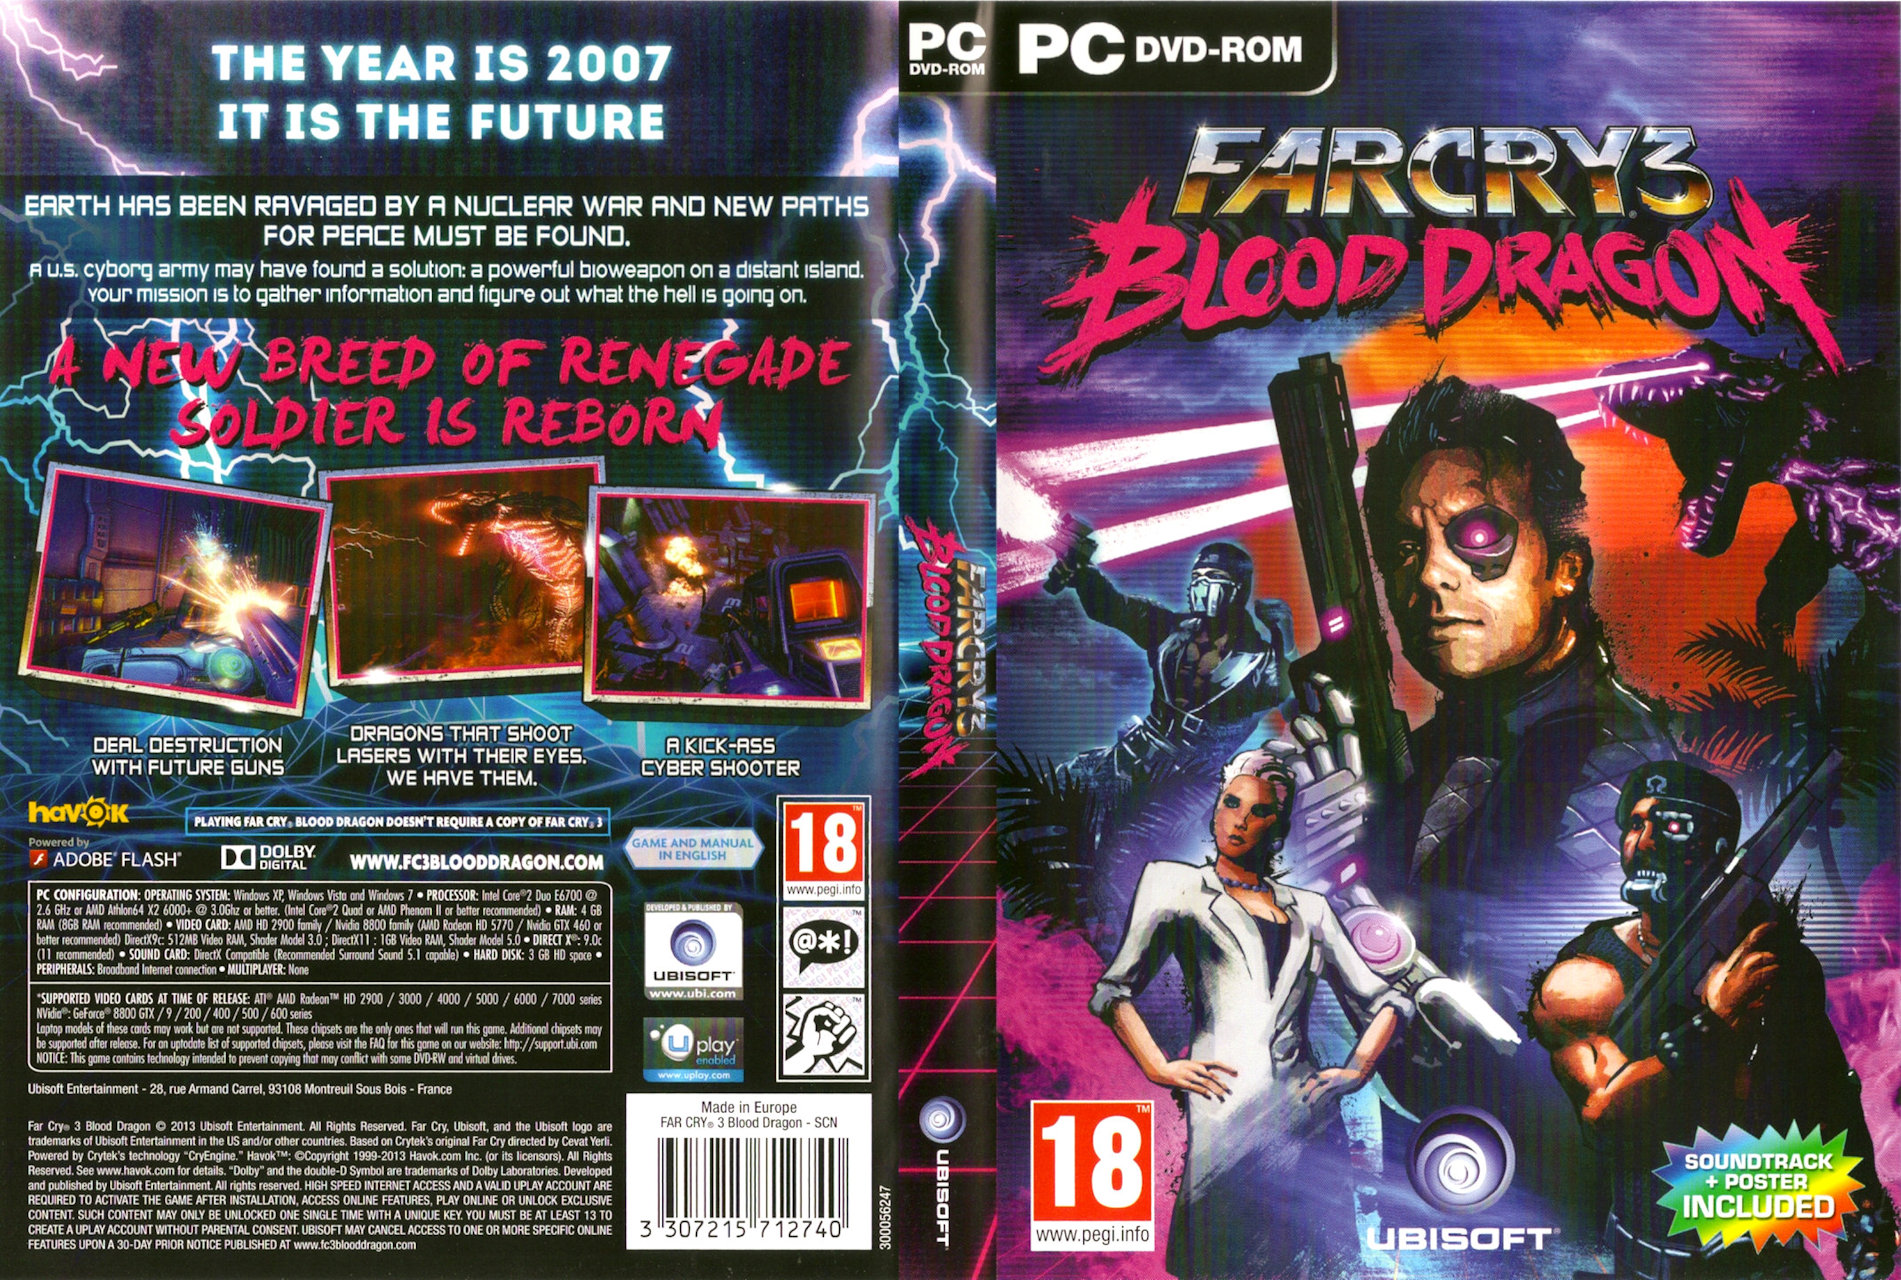 Far Cry 3 Blood Dragon - PC Game Box Cover
Keywords: far_cry_3_media;